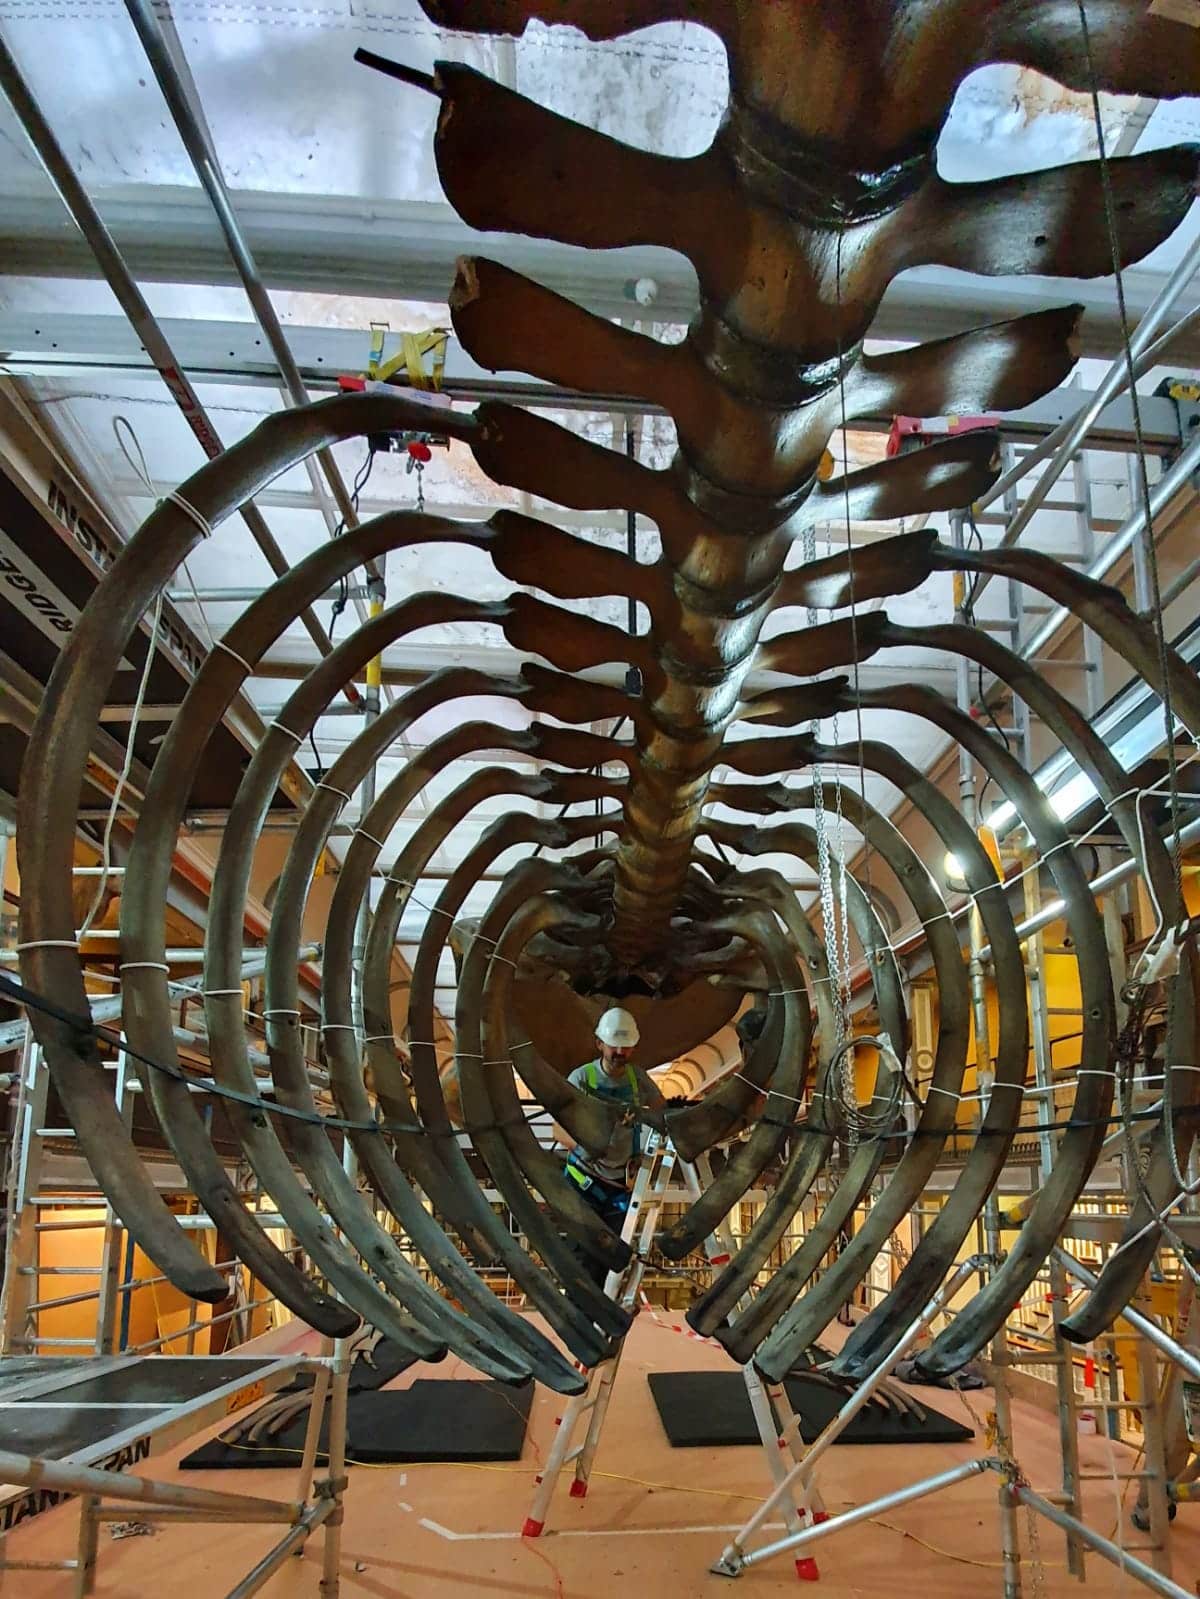 Skeletten | Demontage des historischen Skeletts des Wals | National Museum of Ireland, Dublin